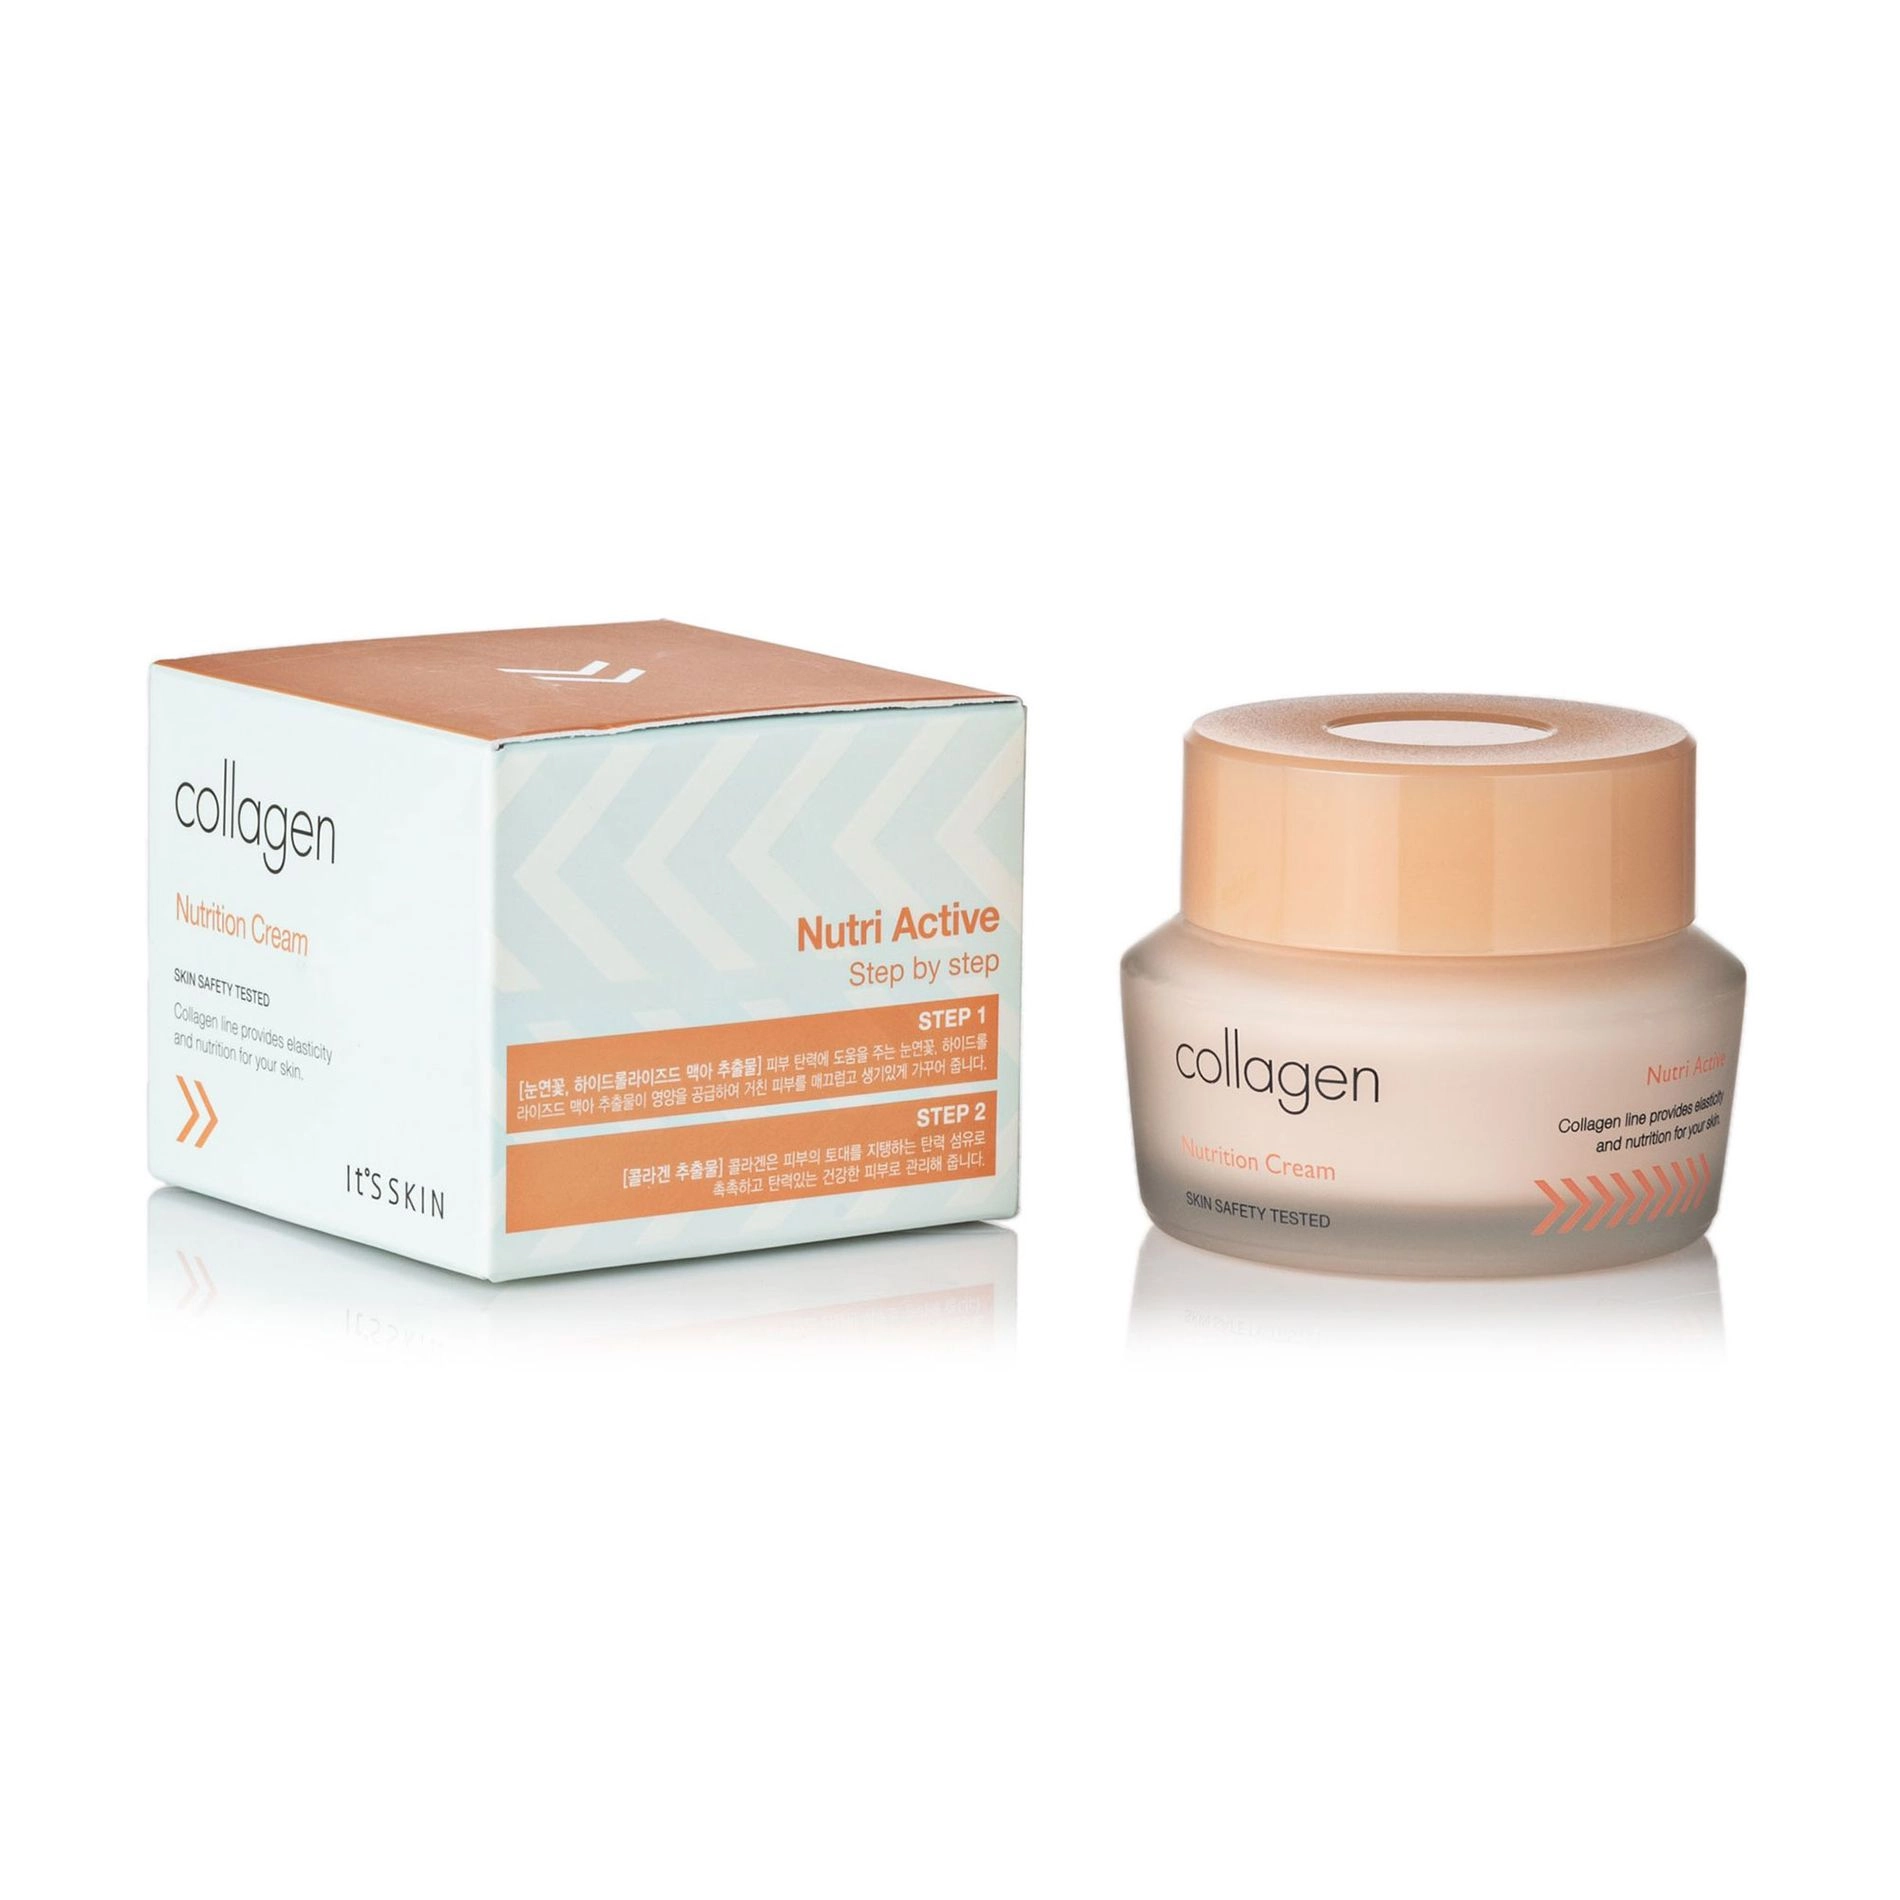 It's Skin Крем для лица Collagen Nutrition Cream с морским коллагеном, 50 мл - фото N1